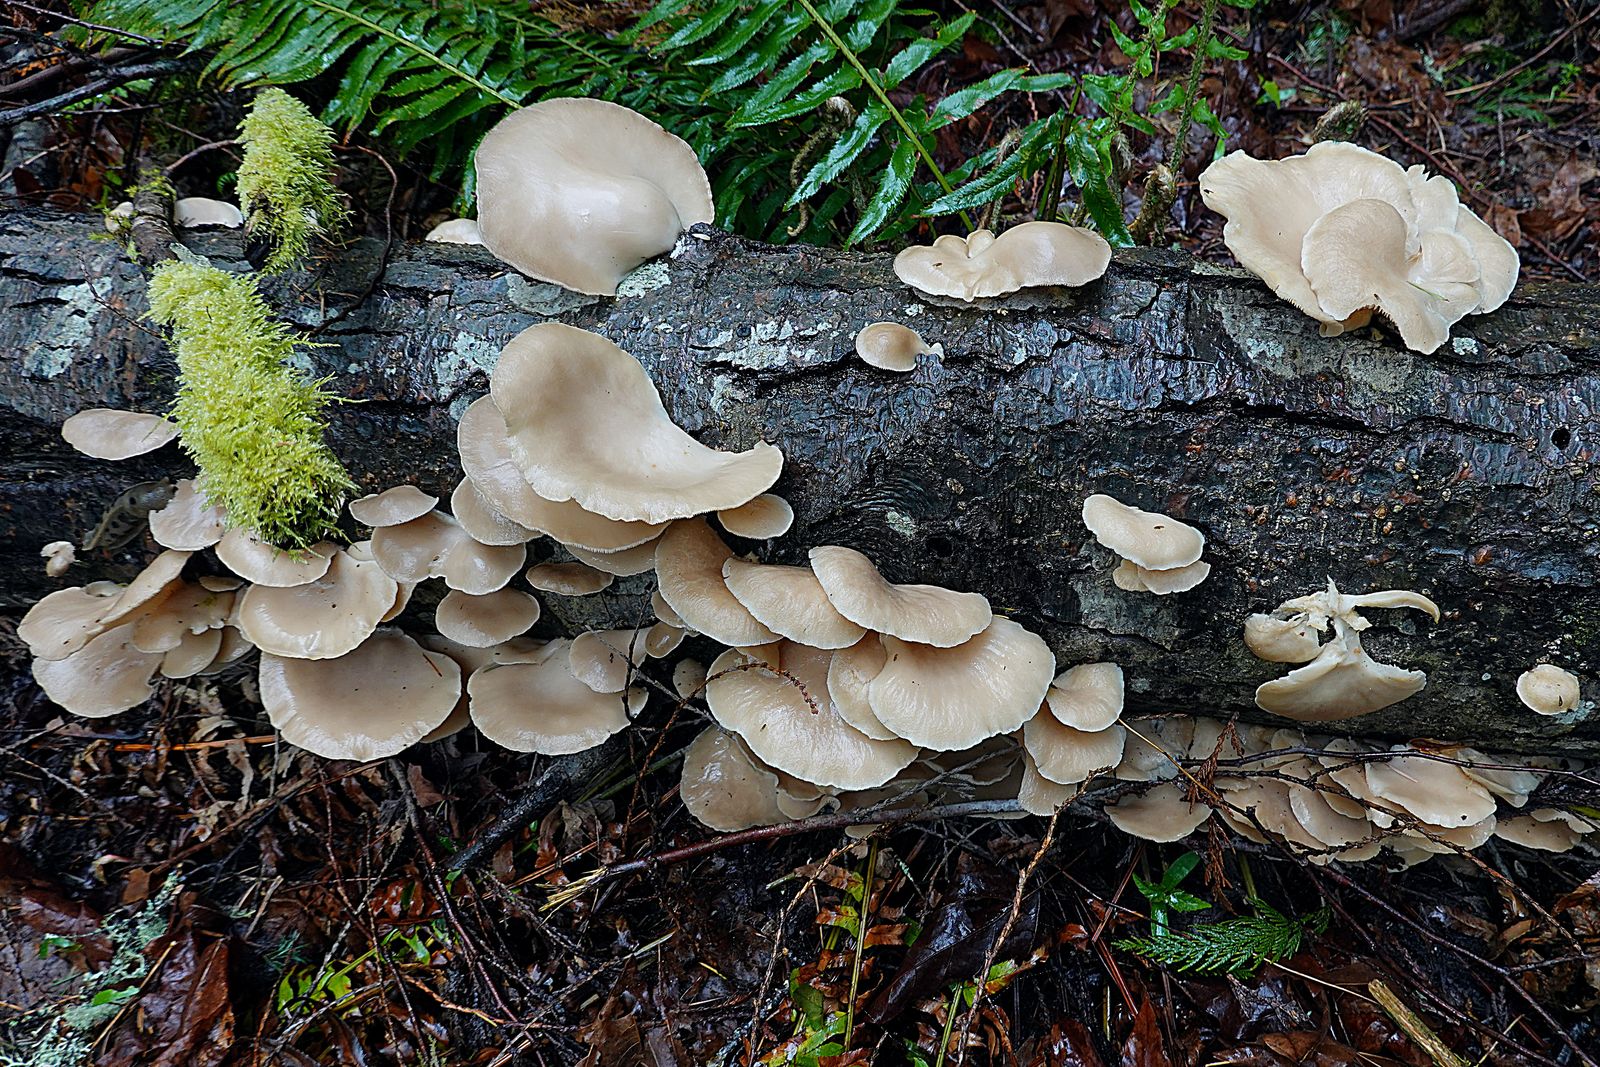  A beautiful clump of bracken mushrooms 